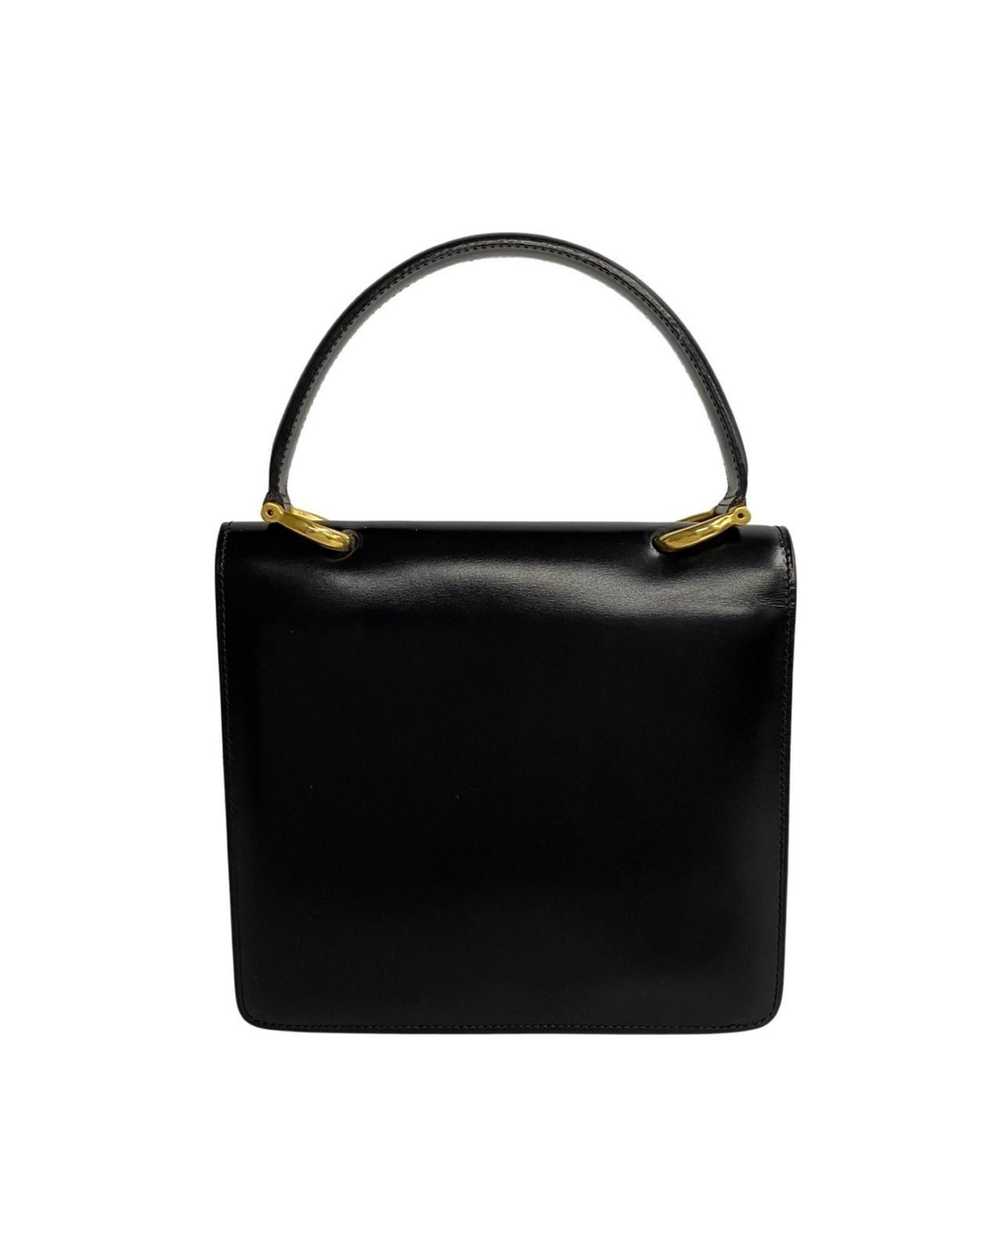 Celine Black Pony-style Calfskin Handbag - image 4